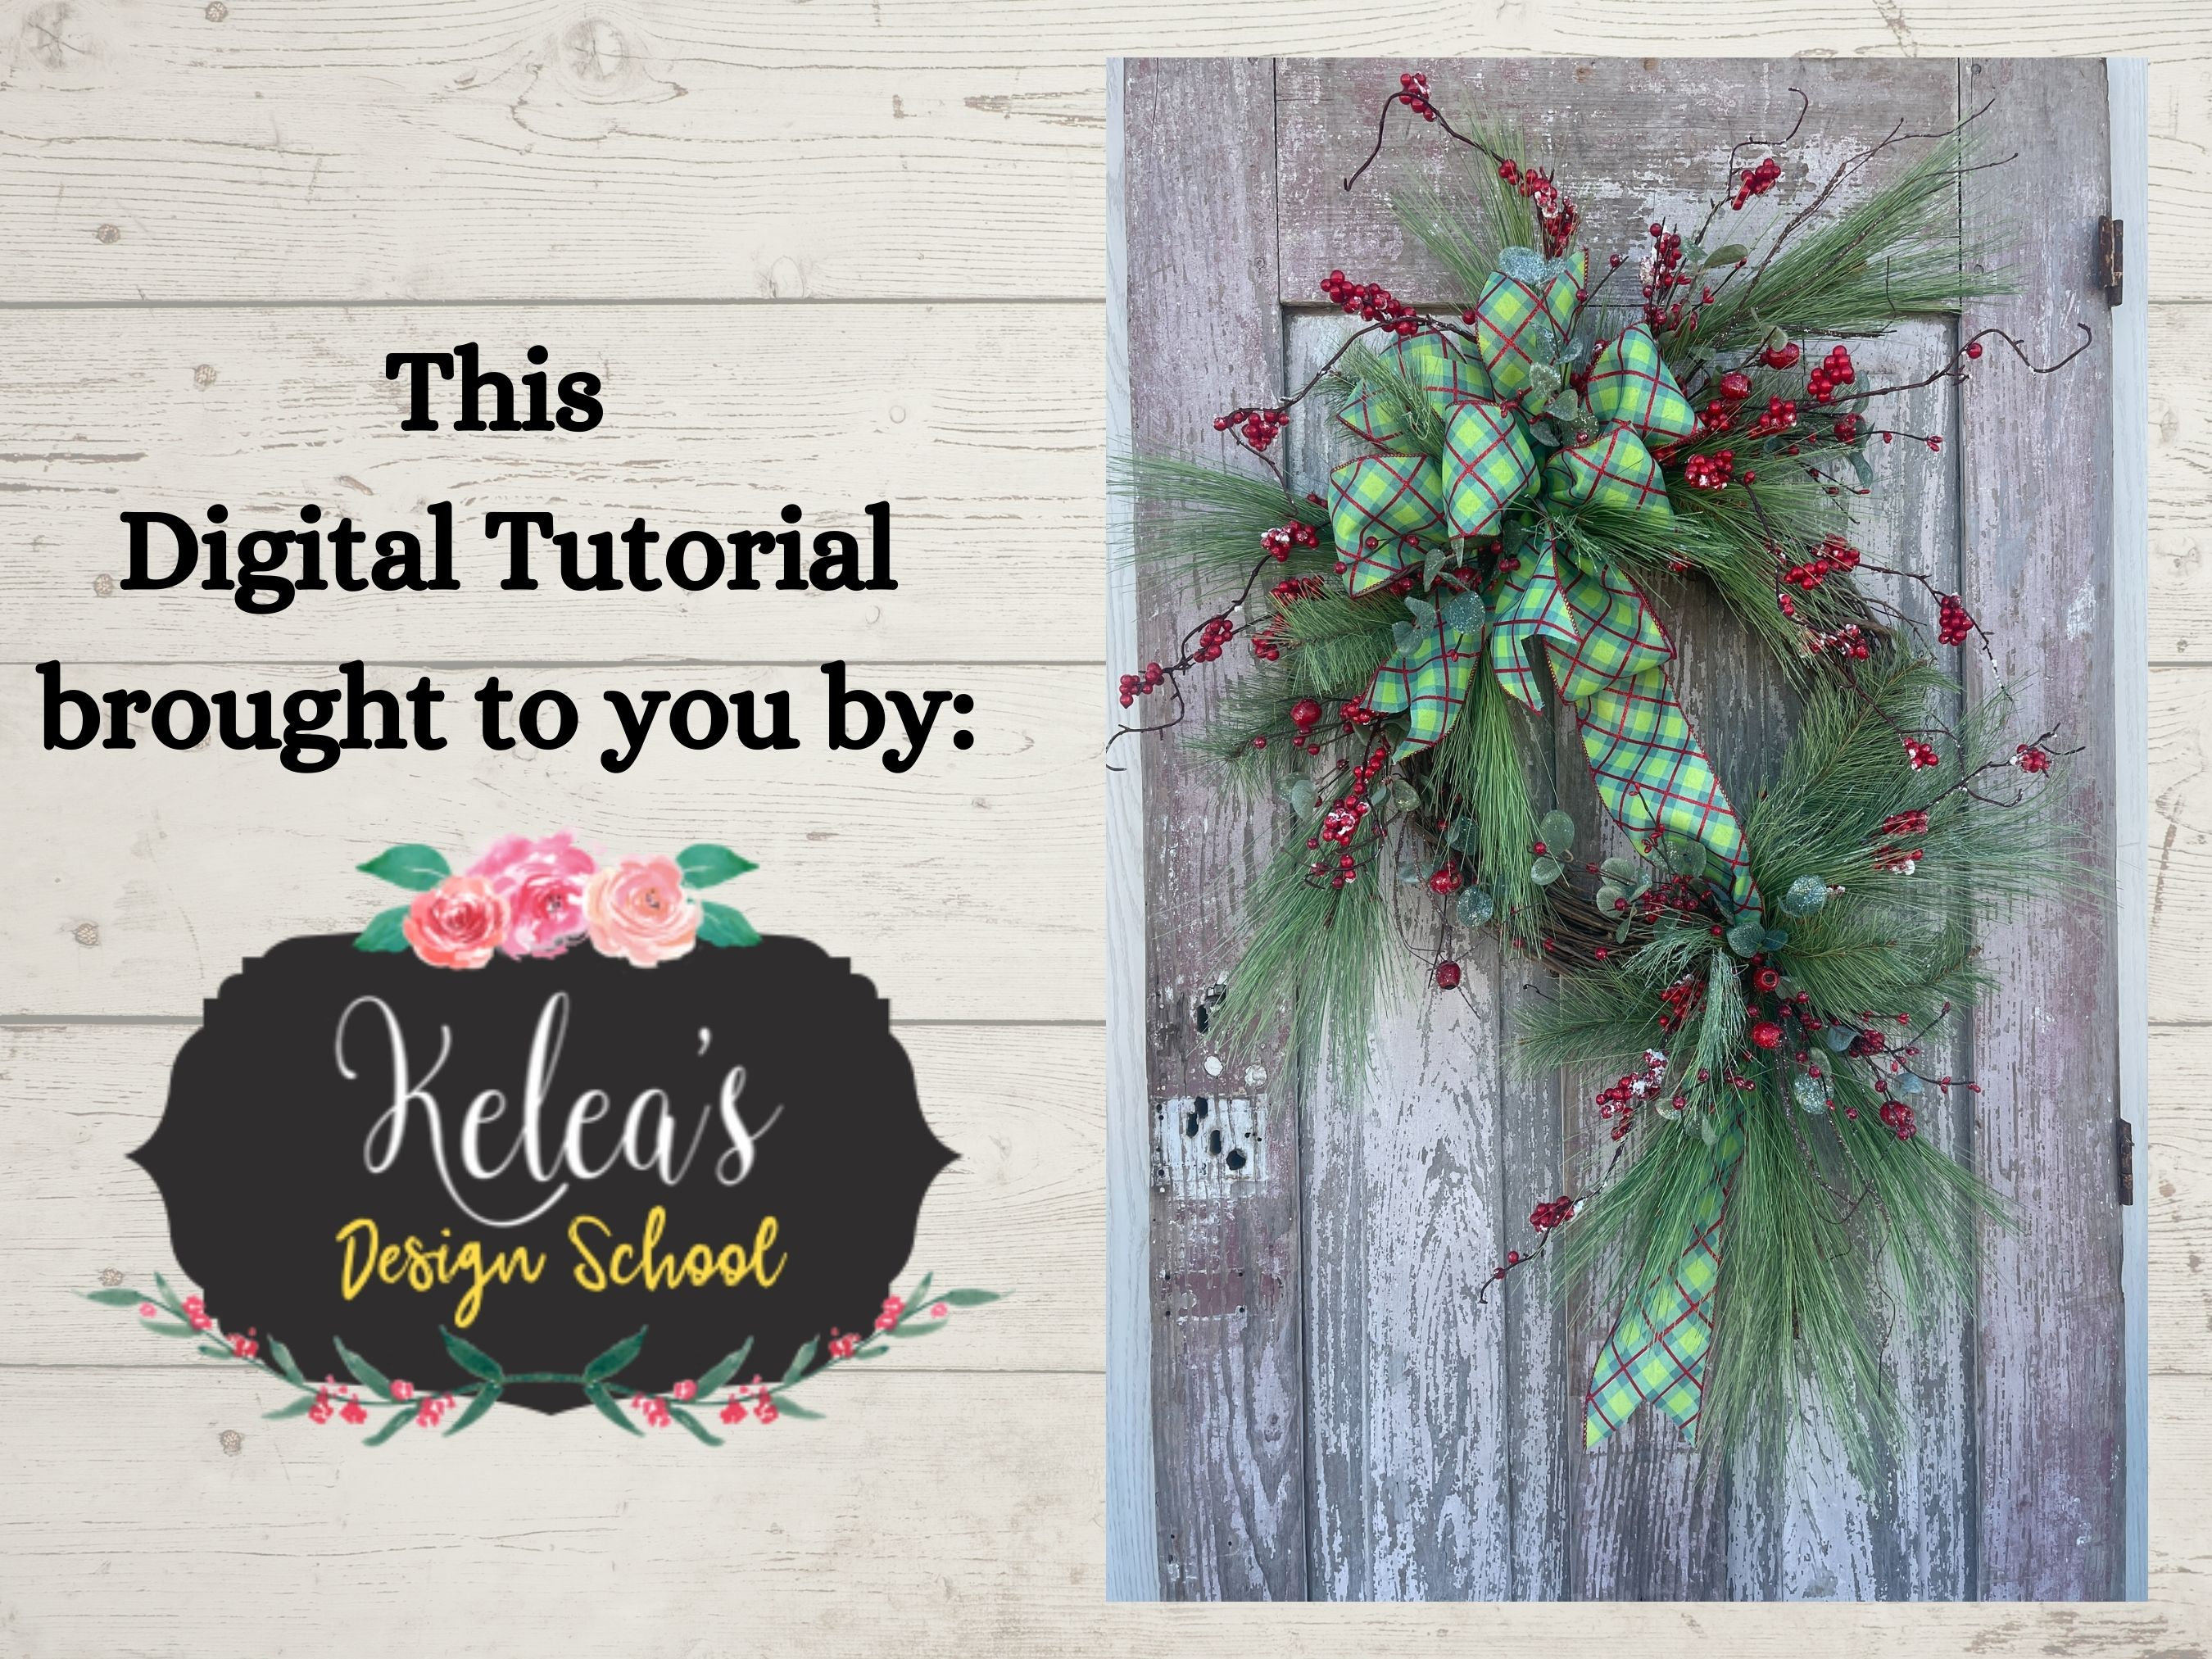 Christmas Wreath Making Supplies You'll Love - Kelea's Florals